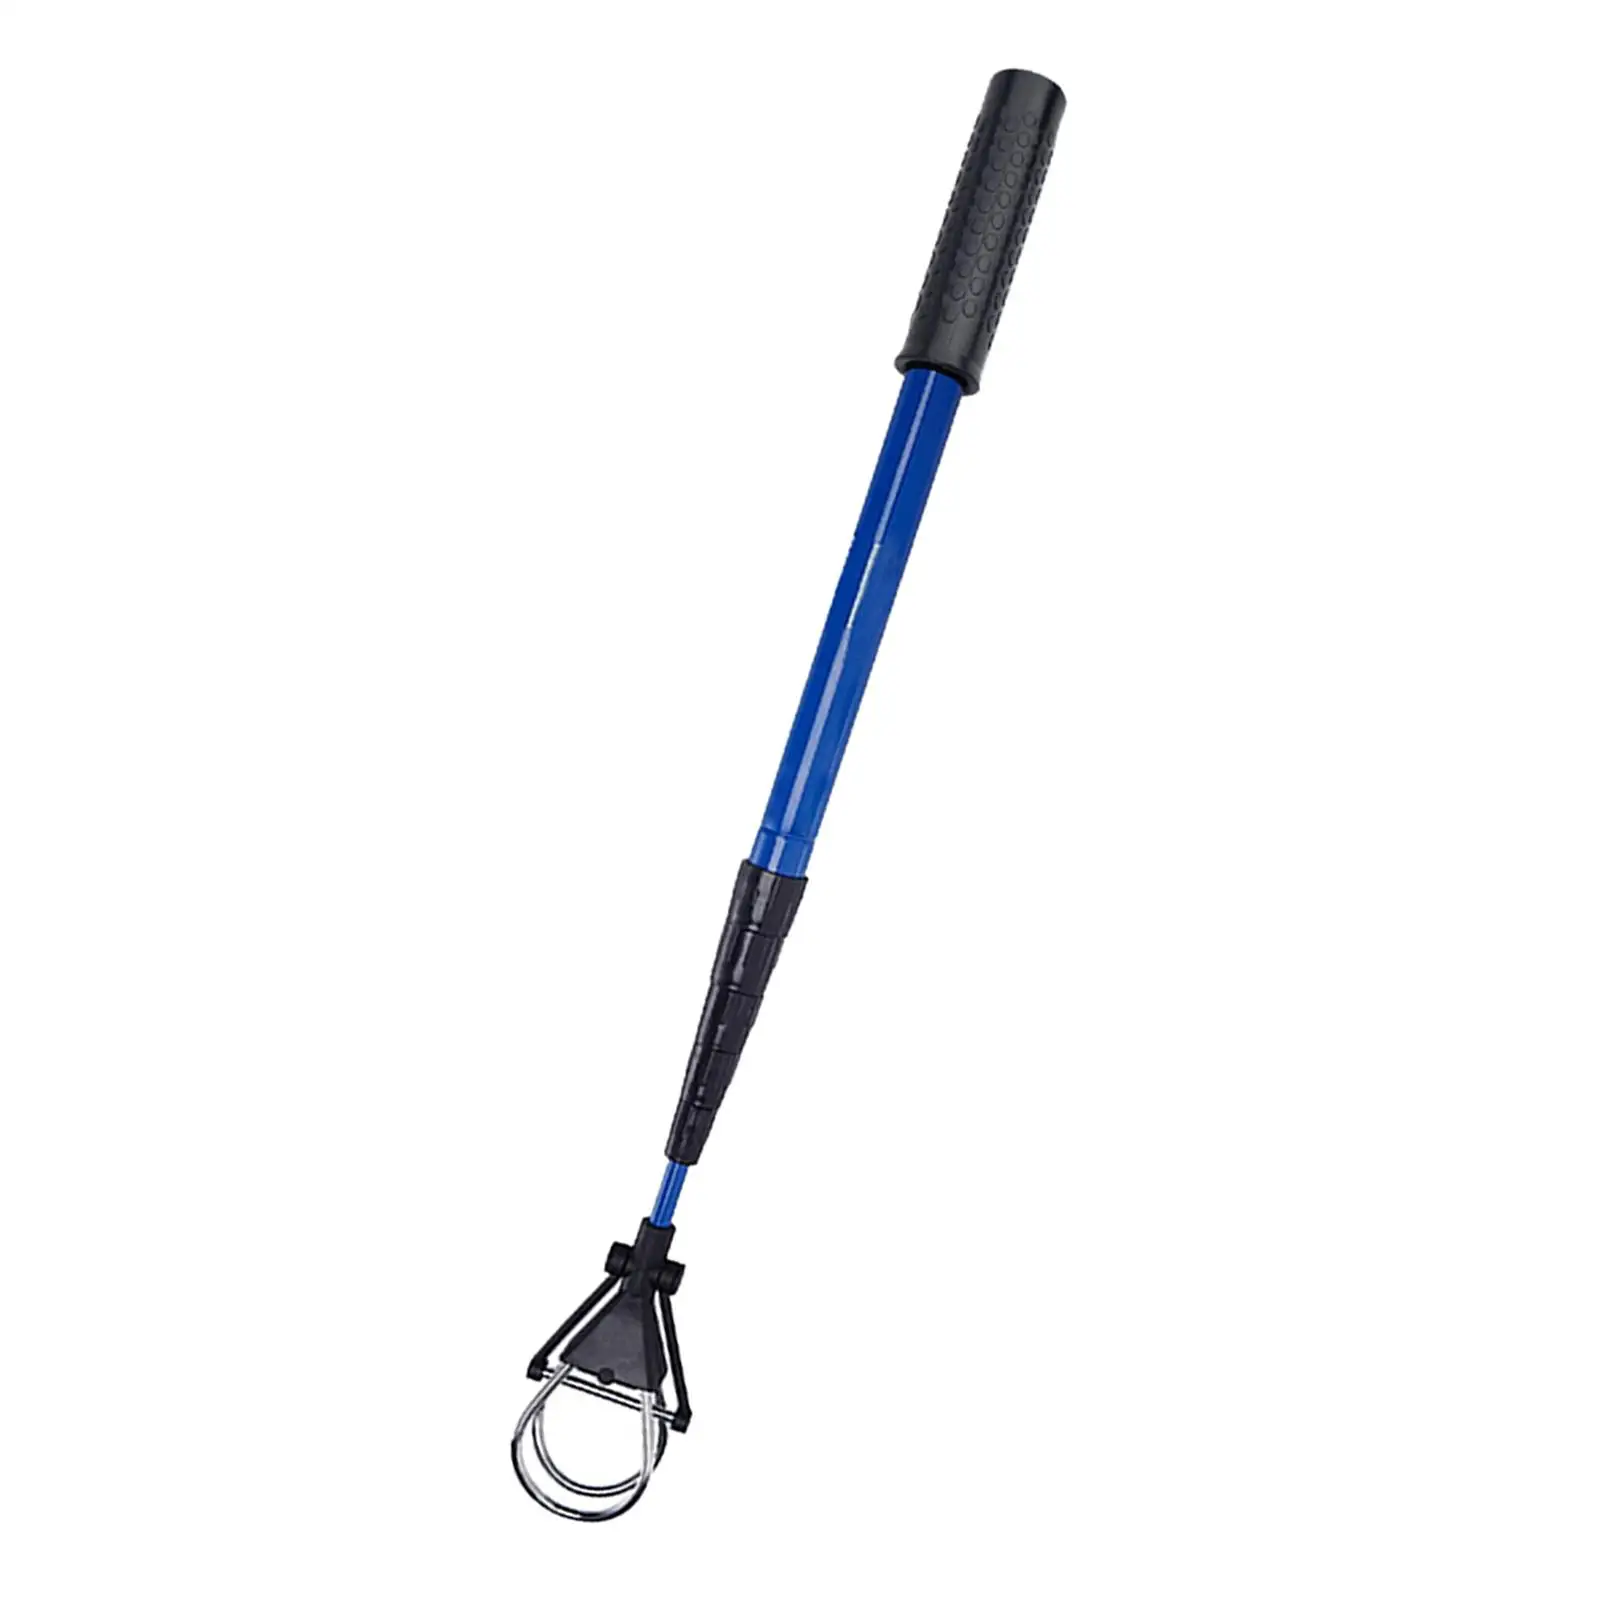 Portable Golf Ball Retriever Locking Accessories Practical Saver Shaft Tool Shaft for Water Women Men Outdoor Pick up